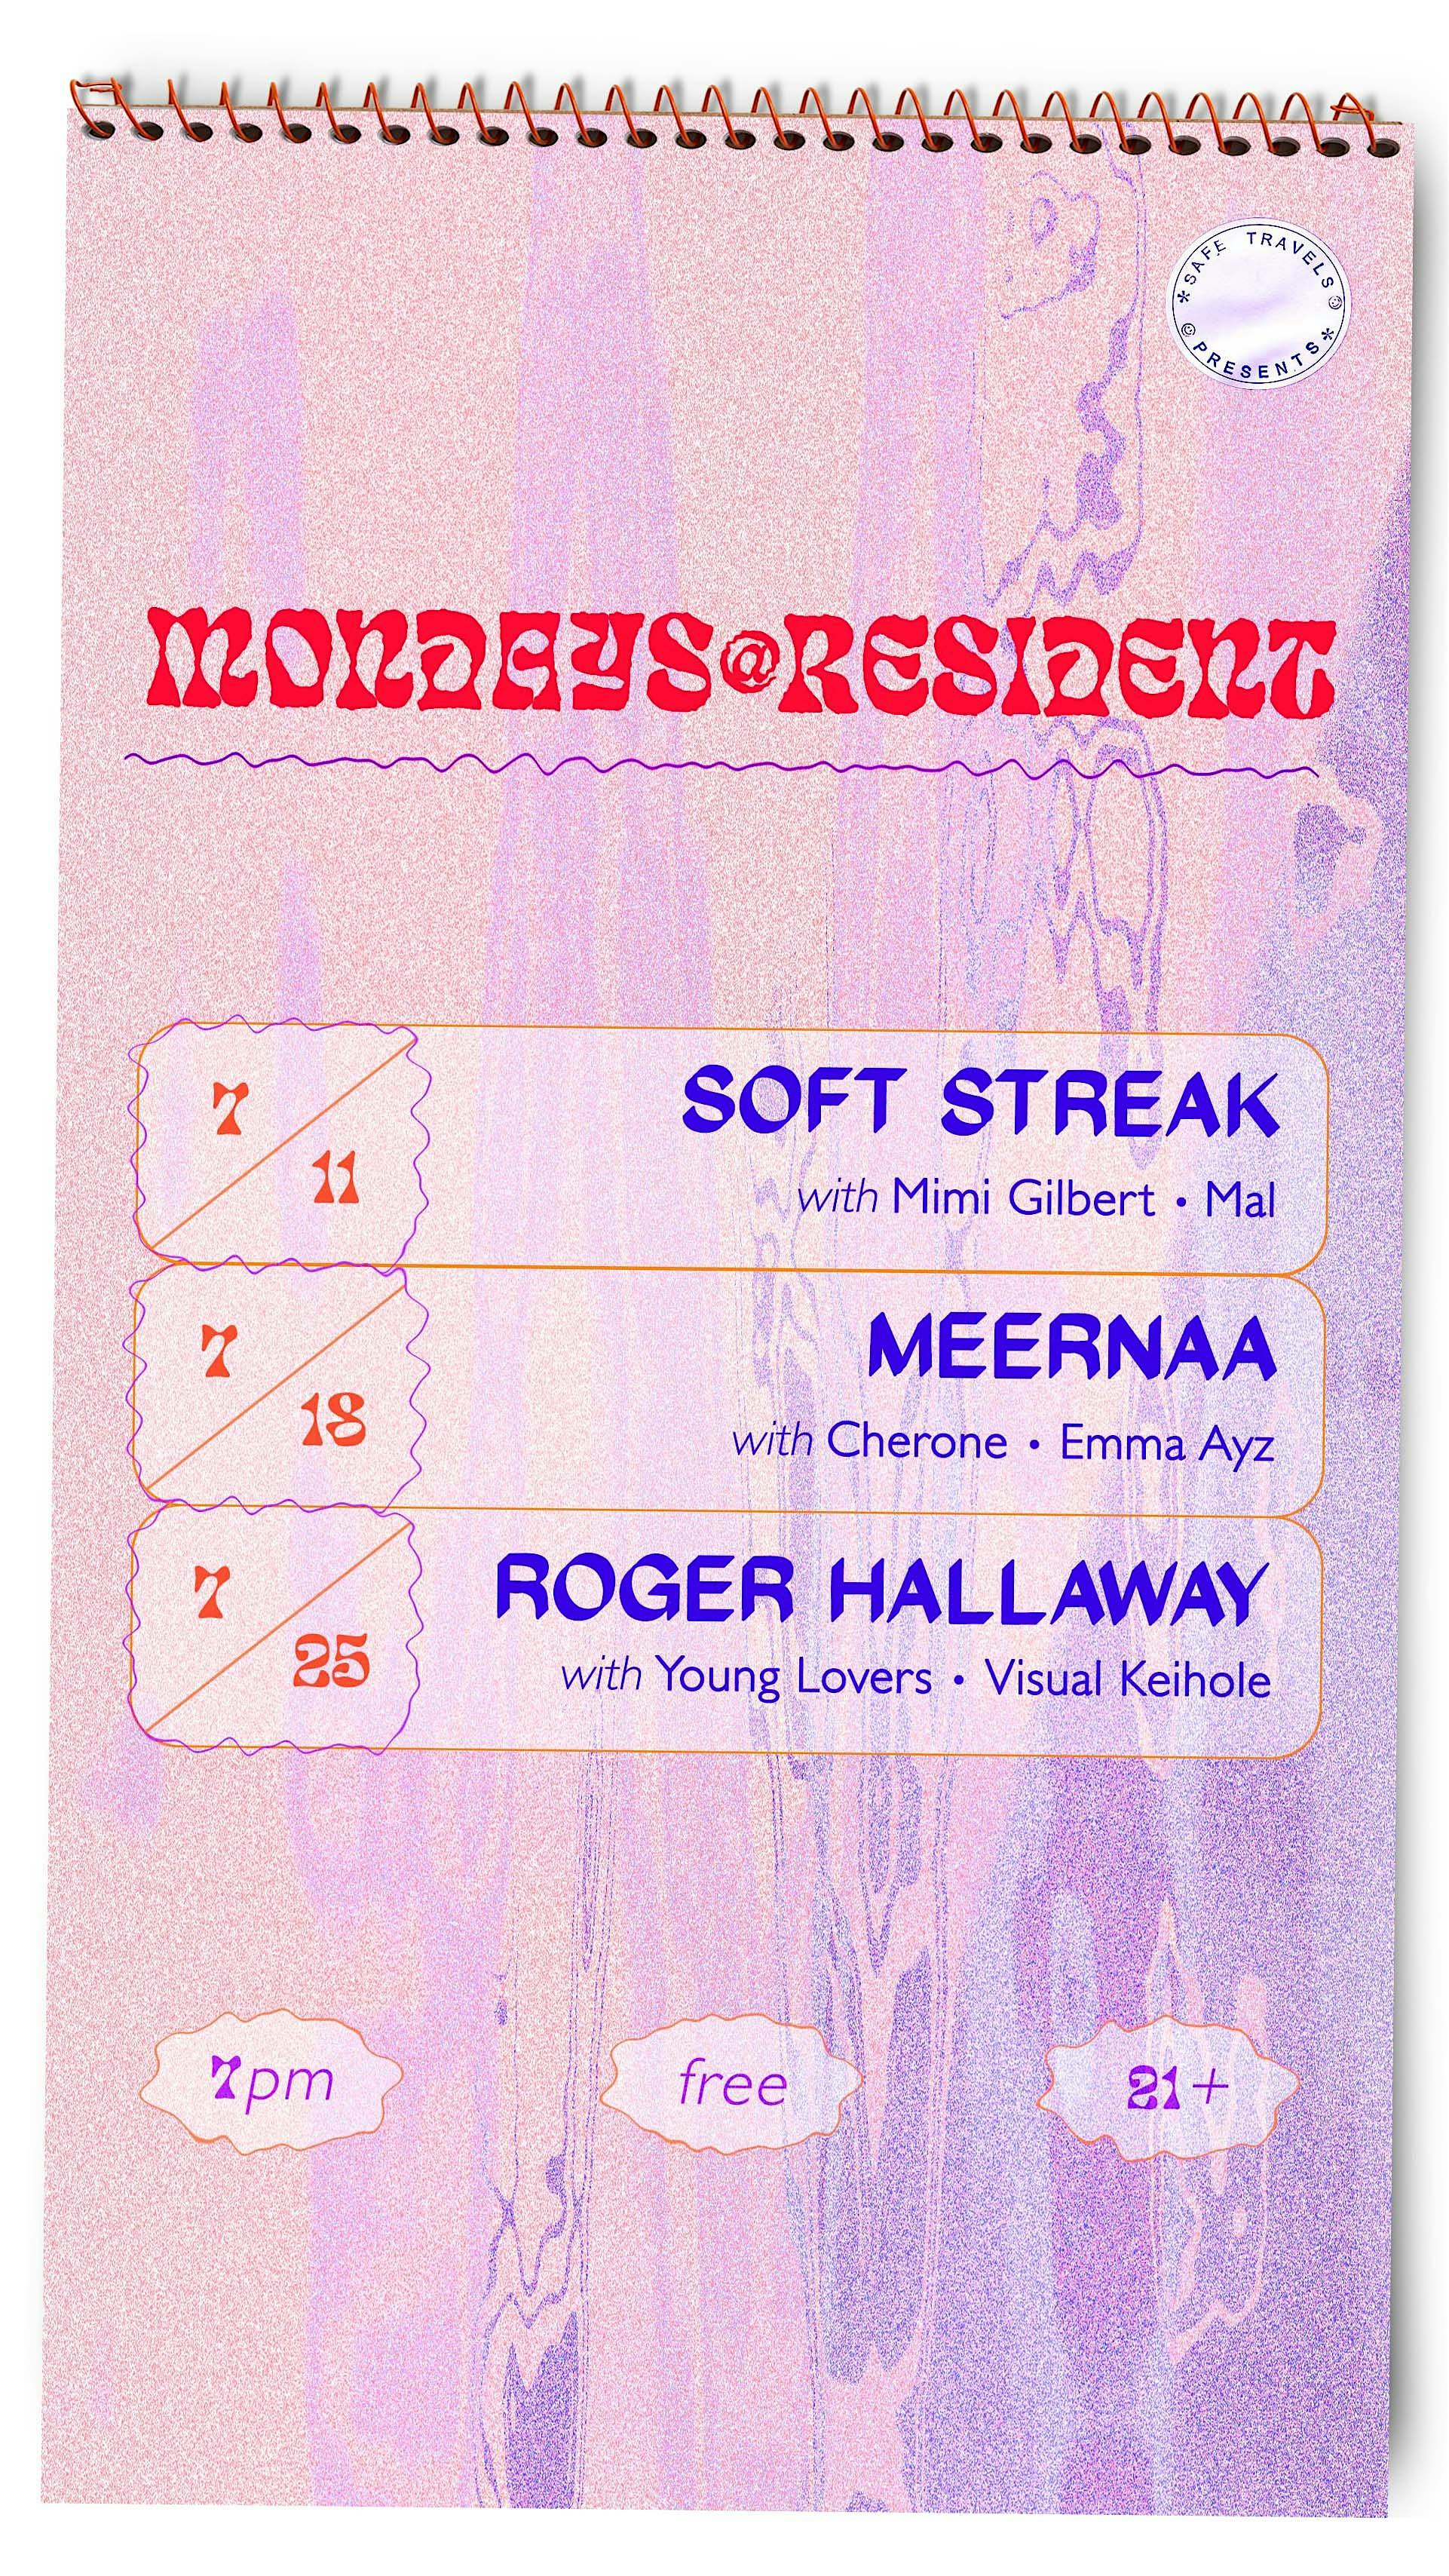 Mondays @ Resident: Soft Streak with Mimi Gilbert & Mal